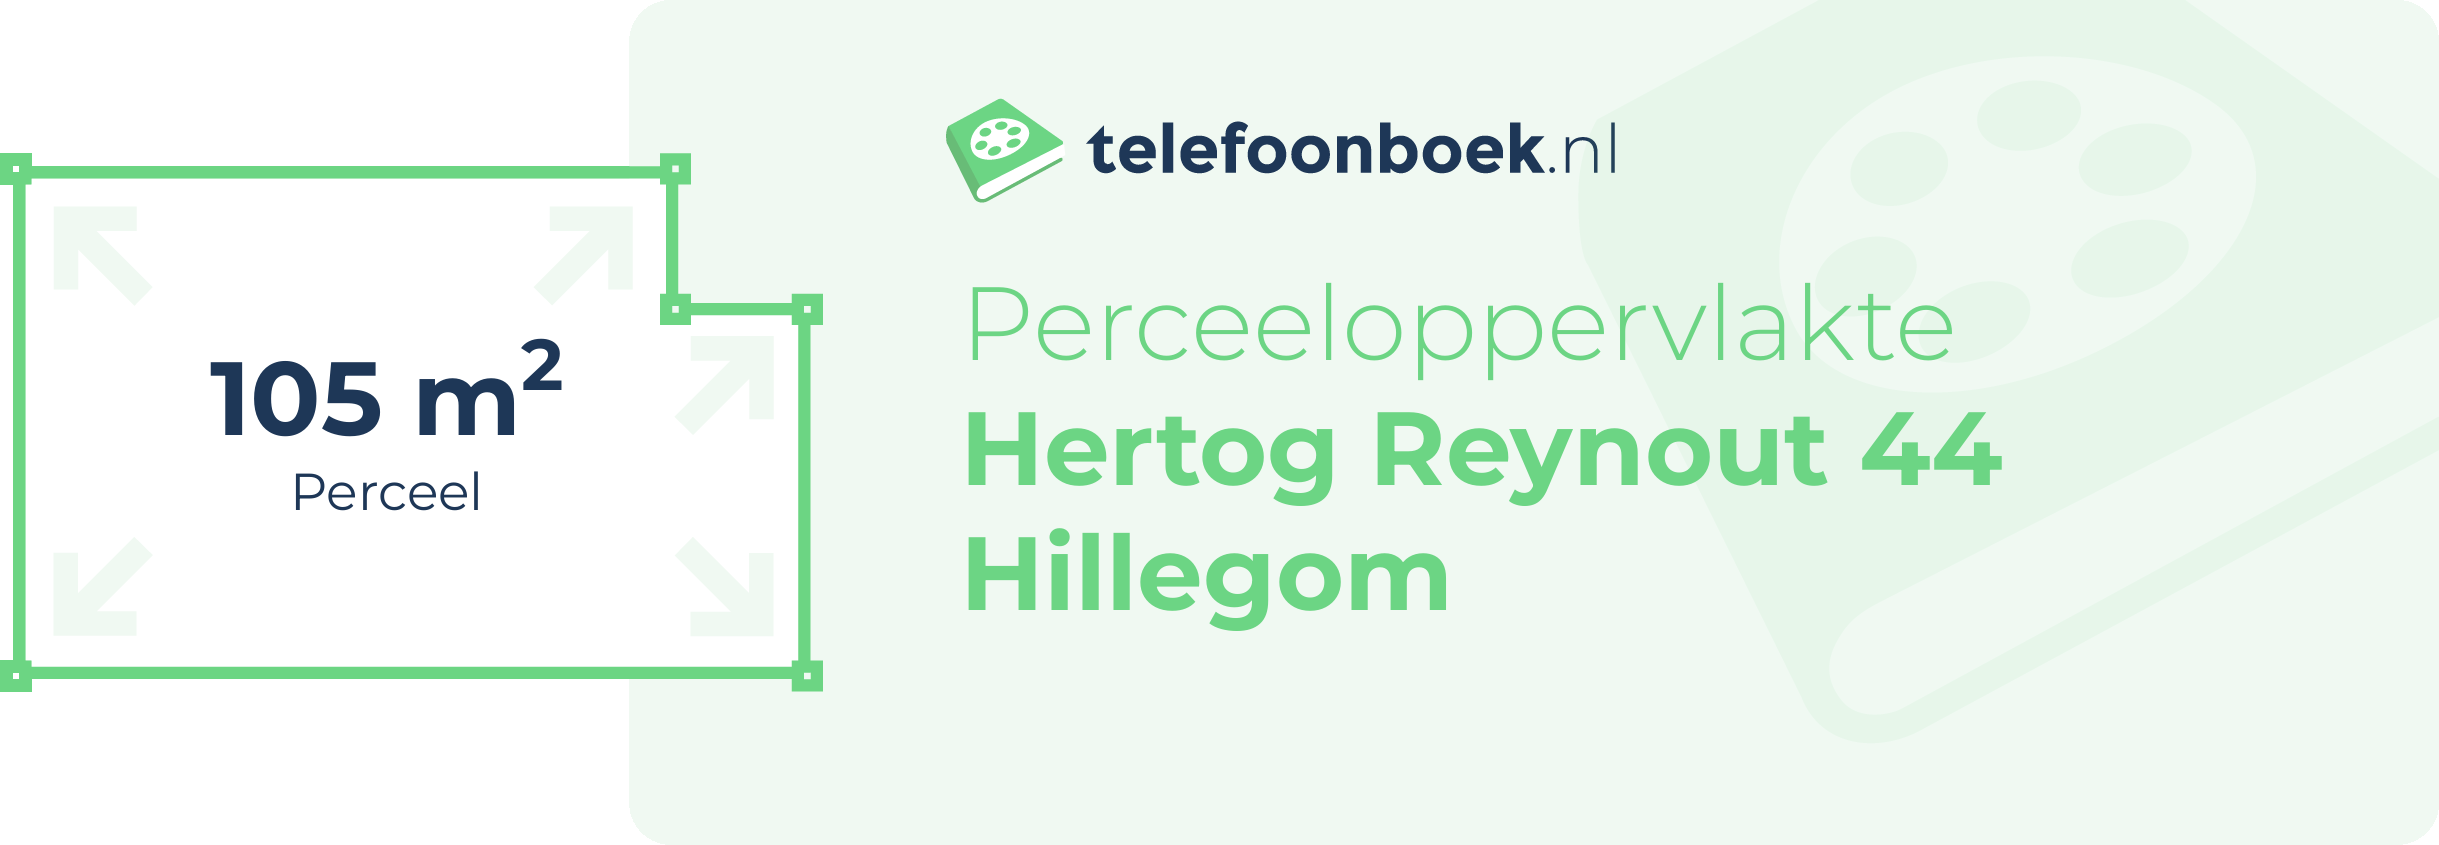 Perceeloppervlakte Hertog Reynout 44 Hillegom